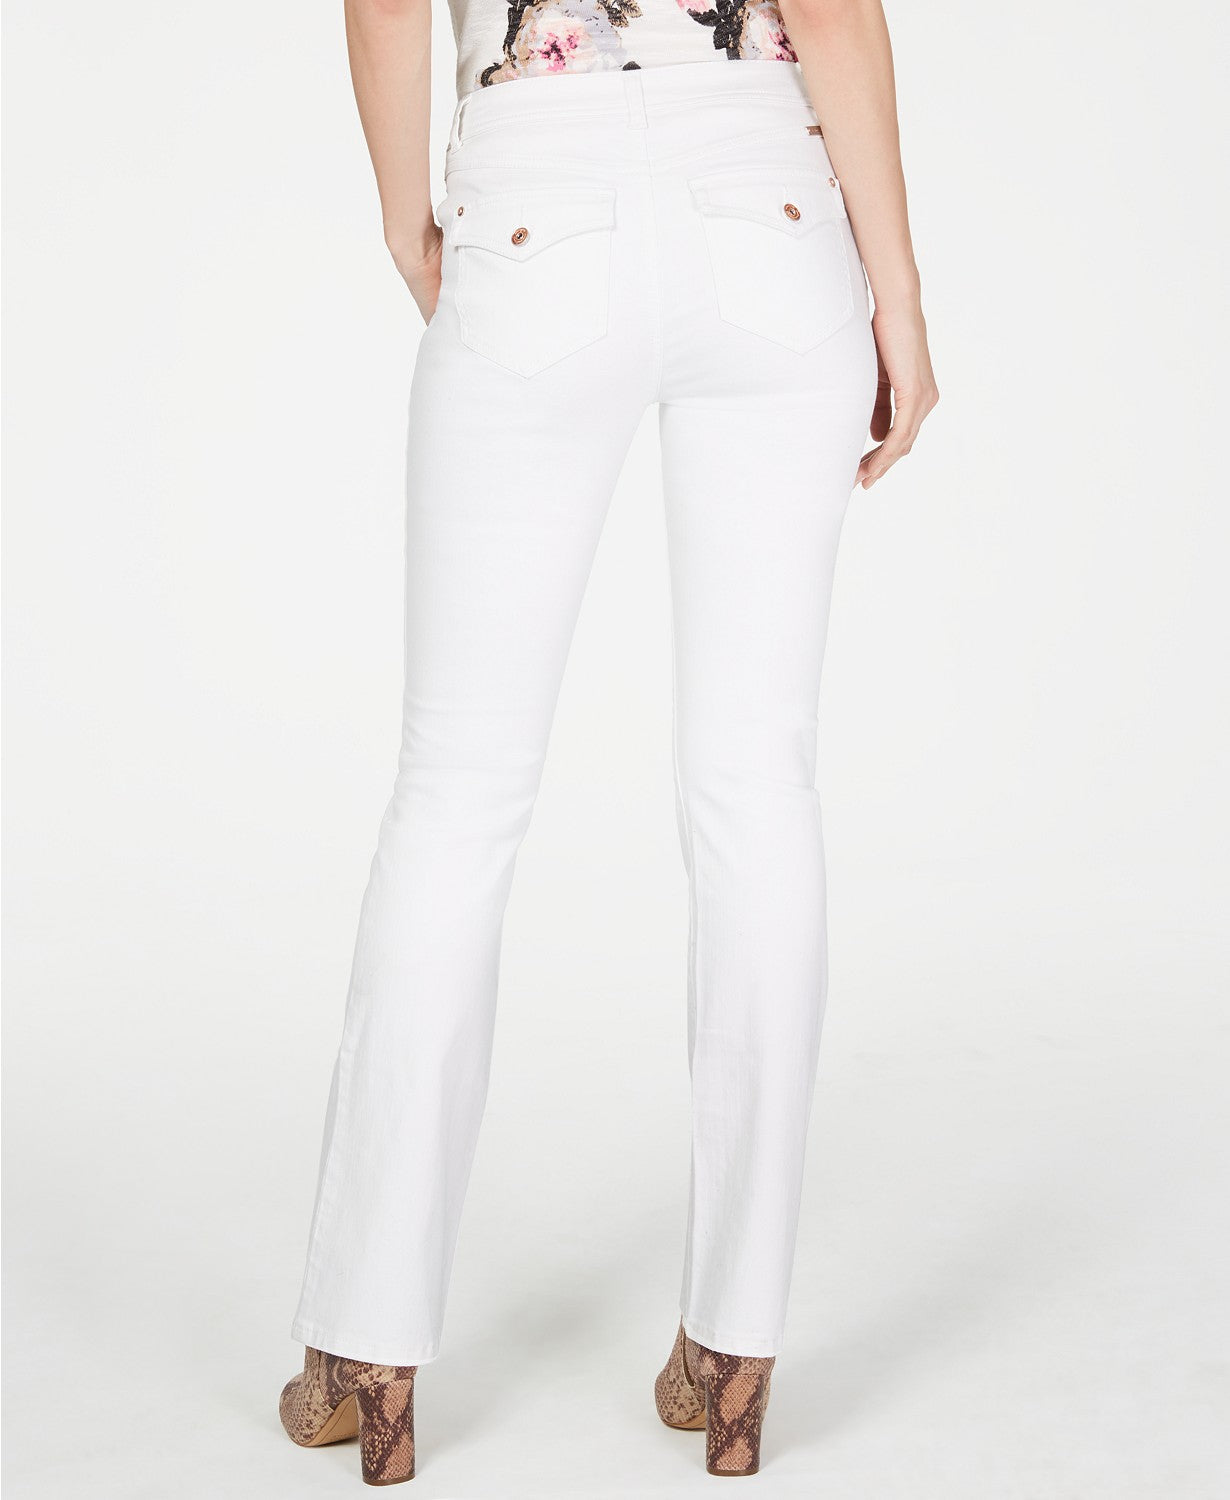 Inc International Concepts Womens Petite White Boot-cut Jeans